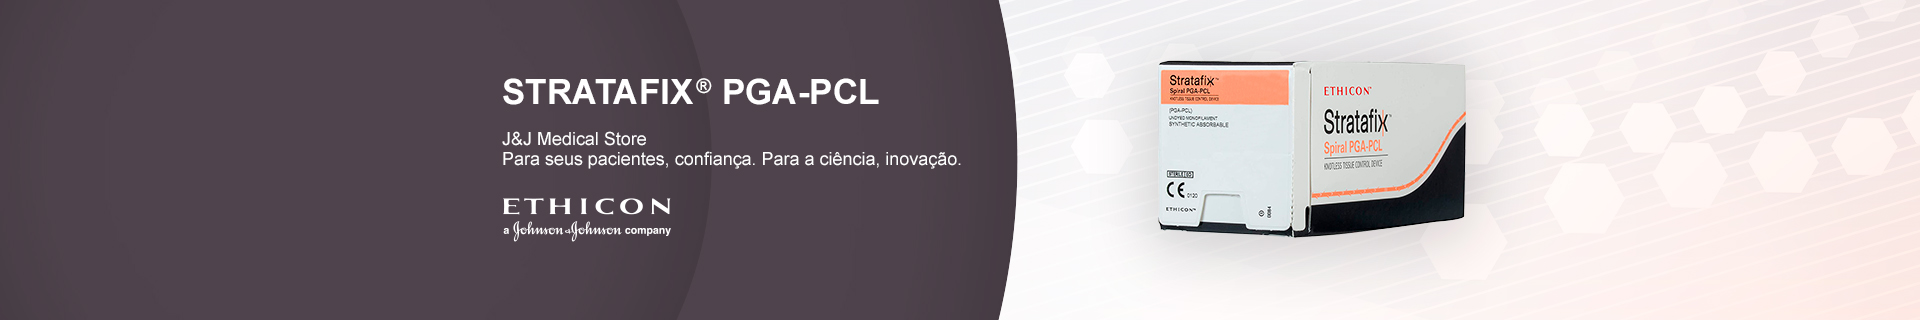 Stratafix PGA-PCL